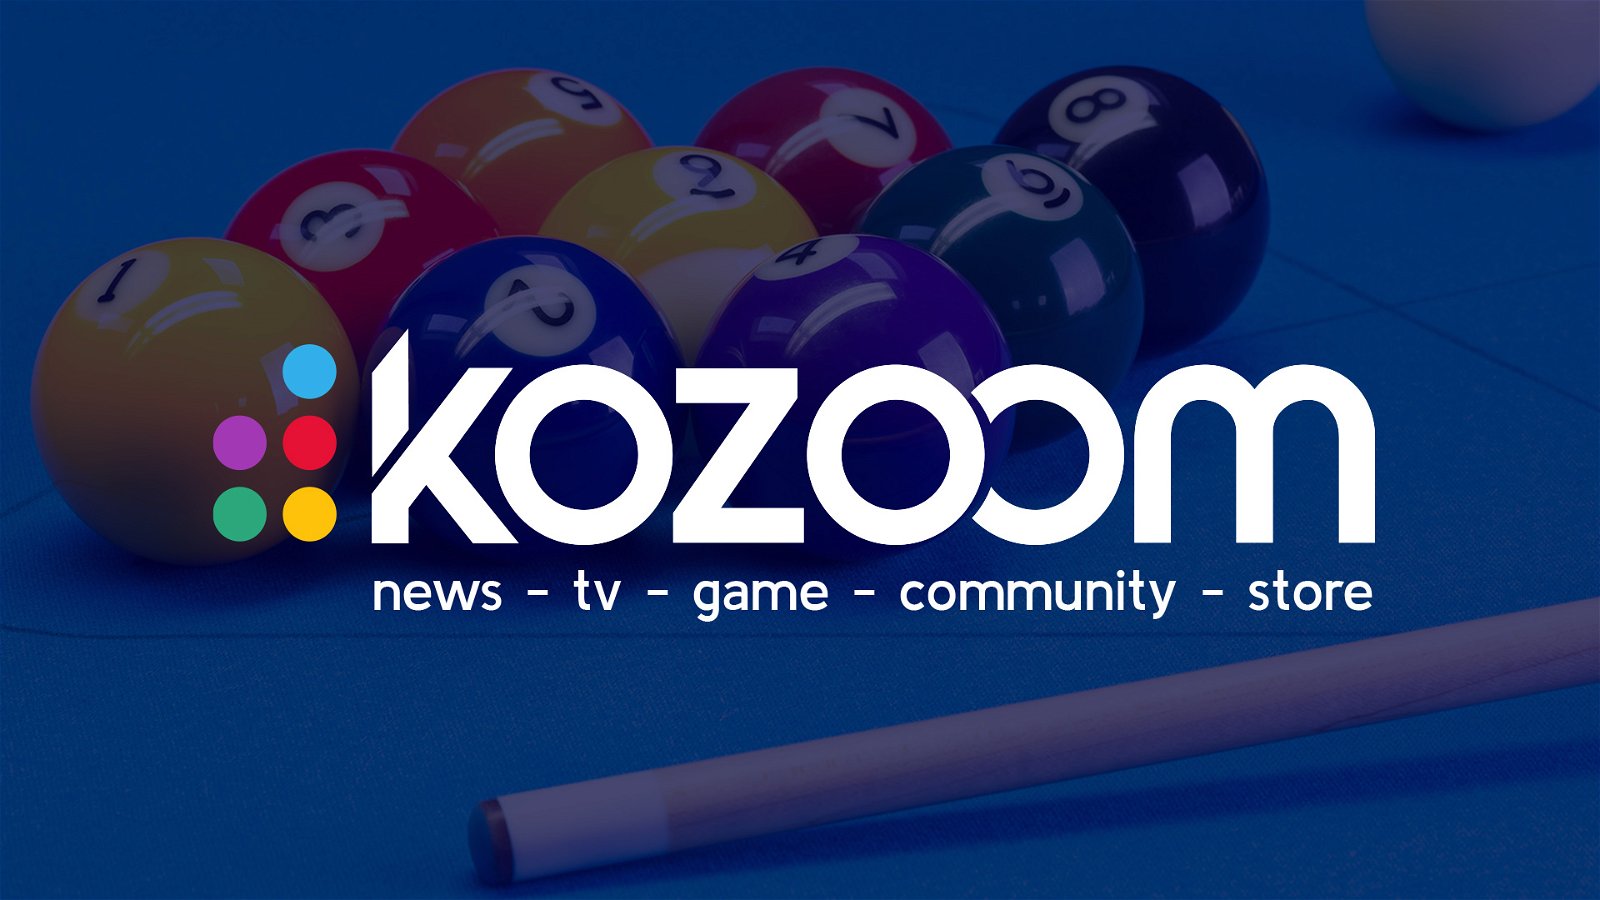 www.kozoom.com